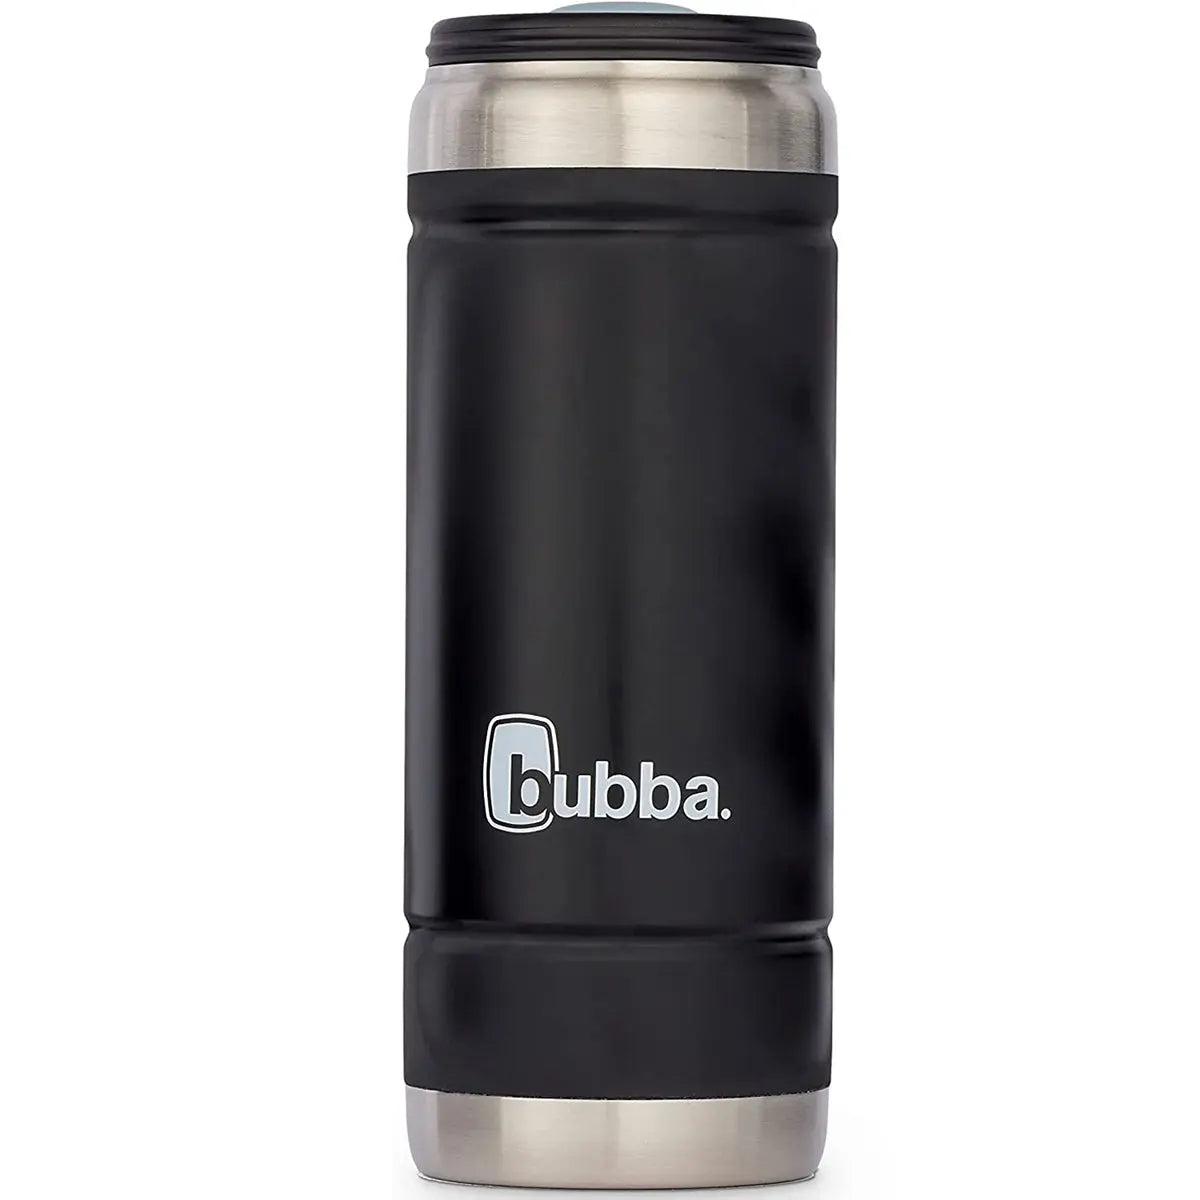 Bubba 18 oz. Trailblazer Tall Boy Insulated Stainless Steel Tumbler - Licorice Bubba